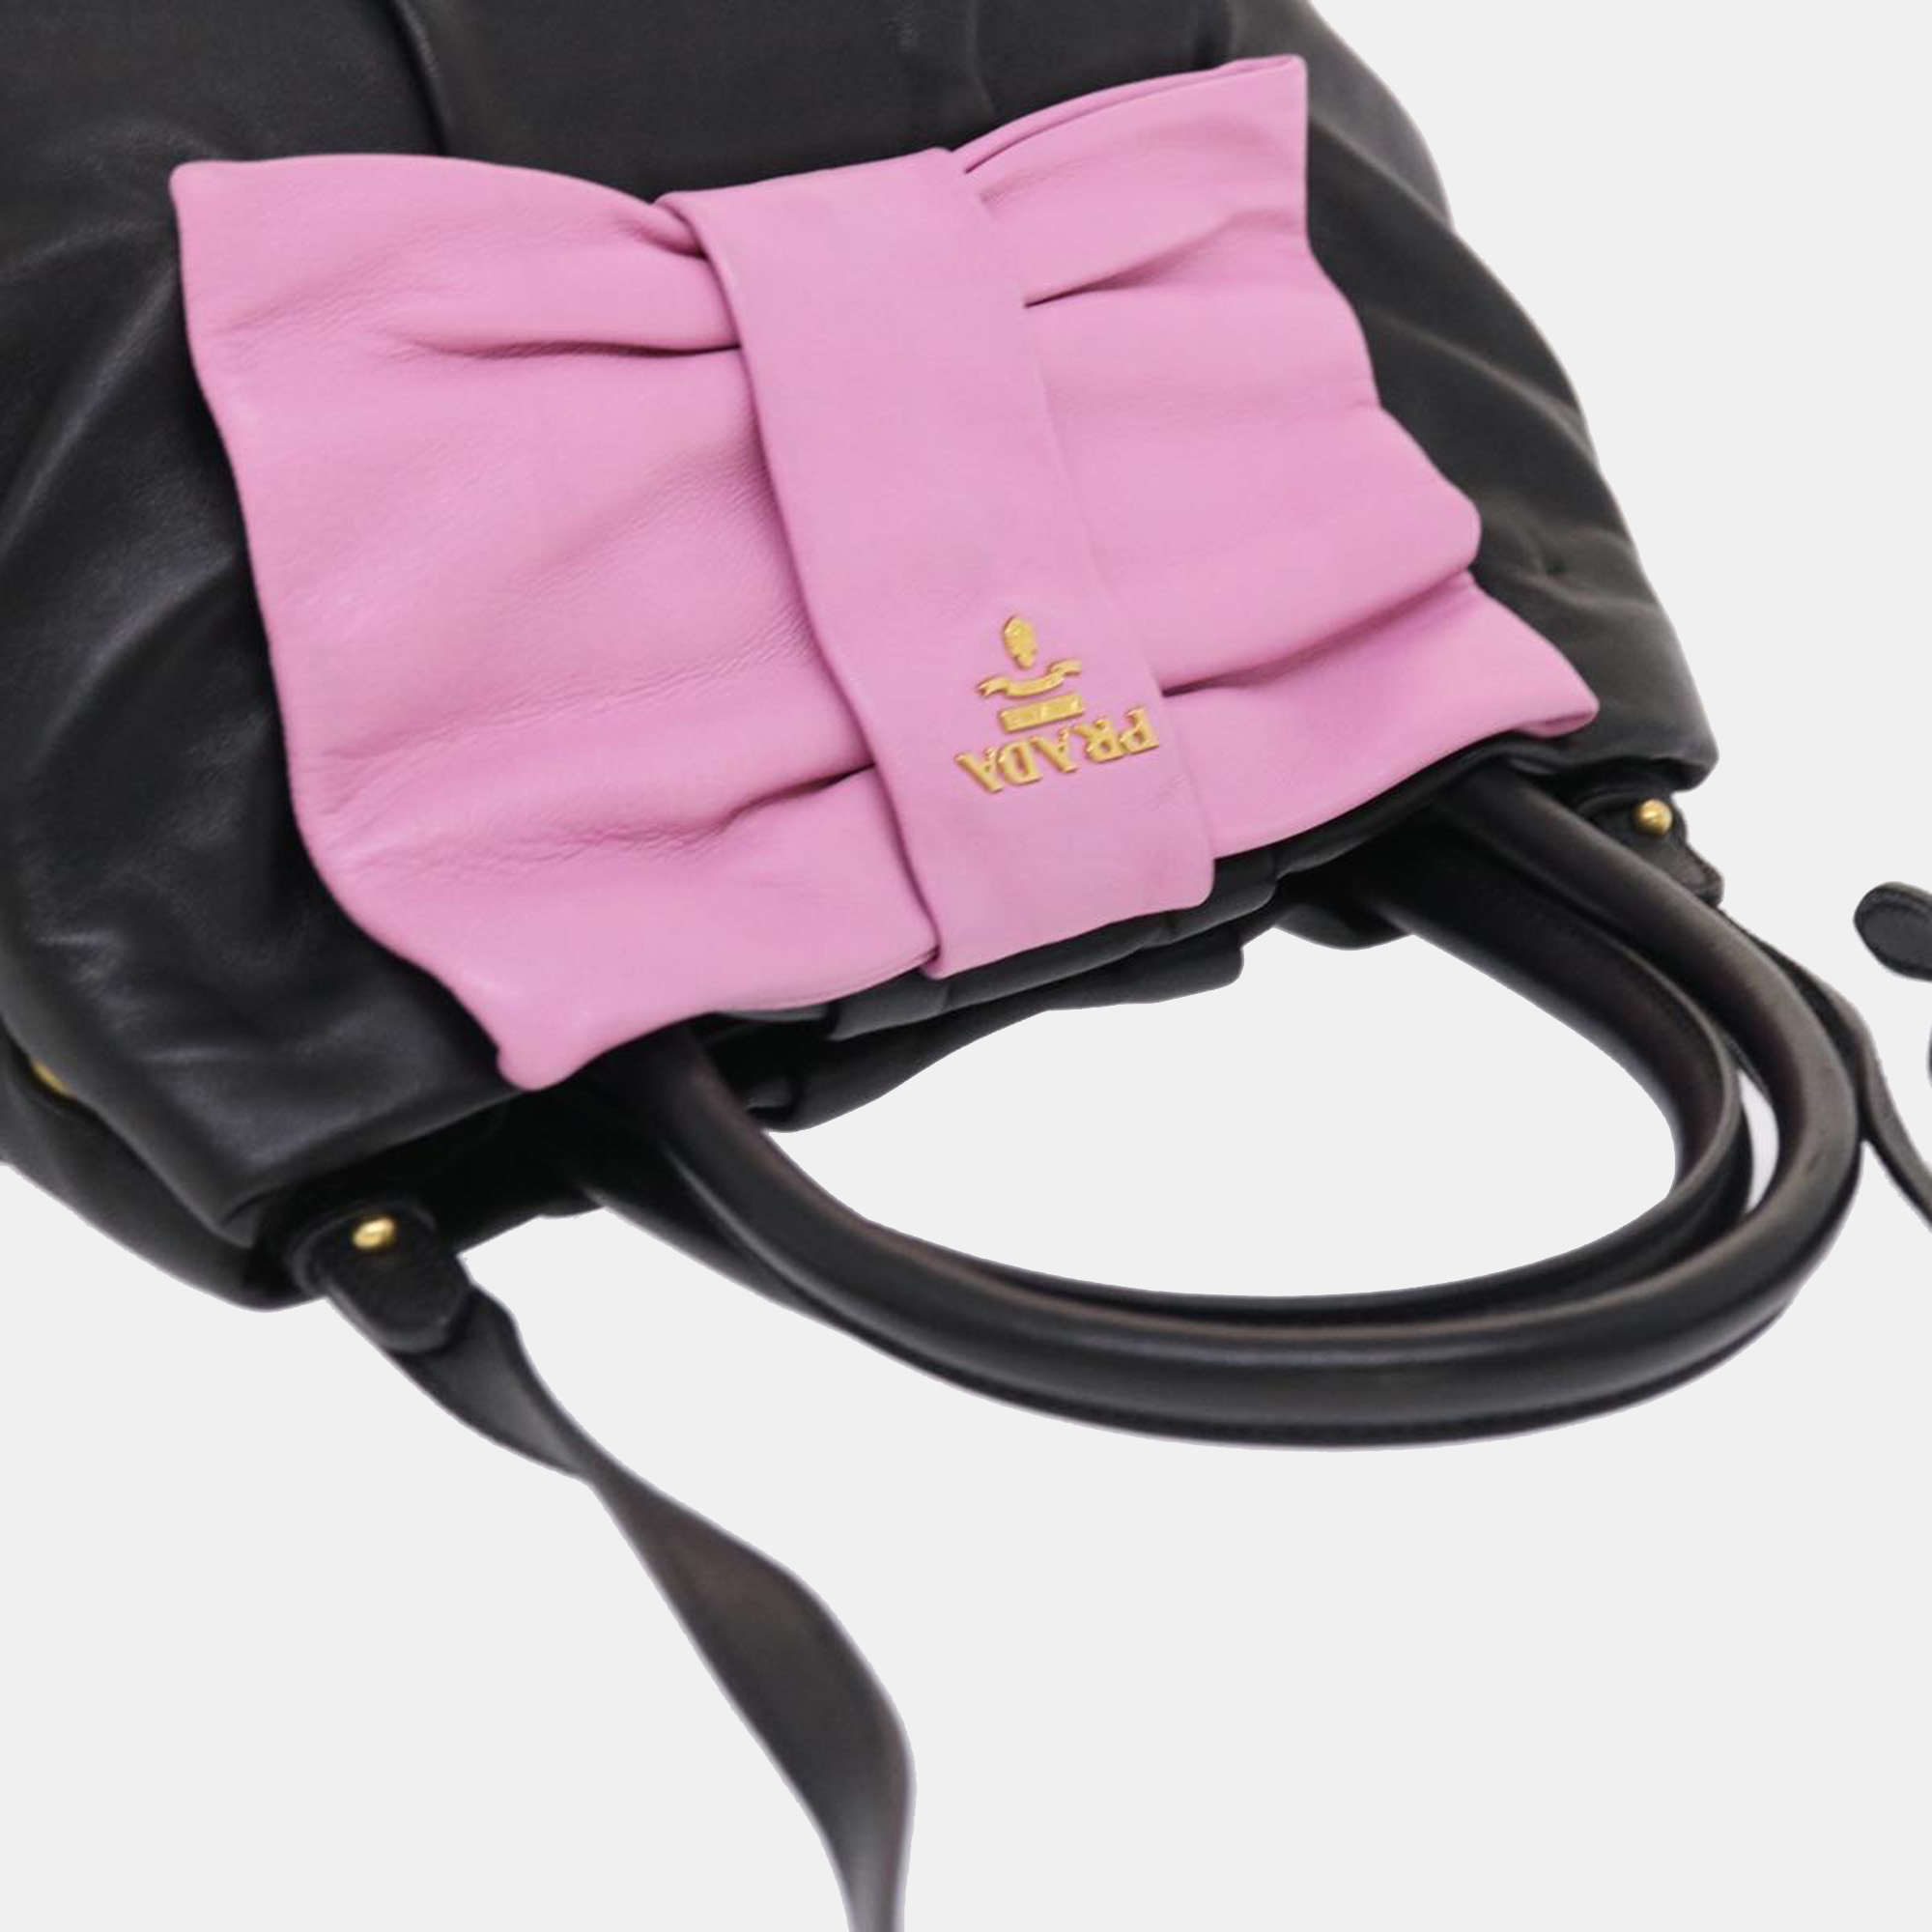 Prada Black Leather Ribbon Handbag